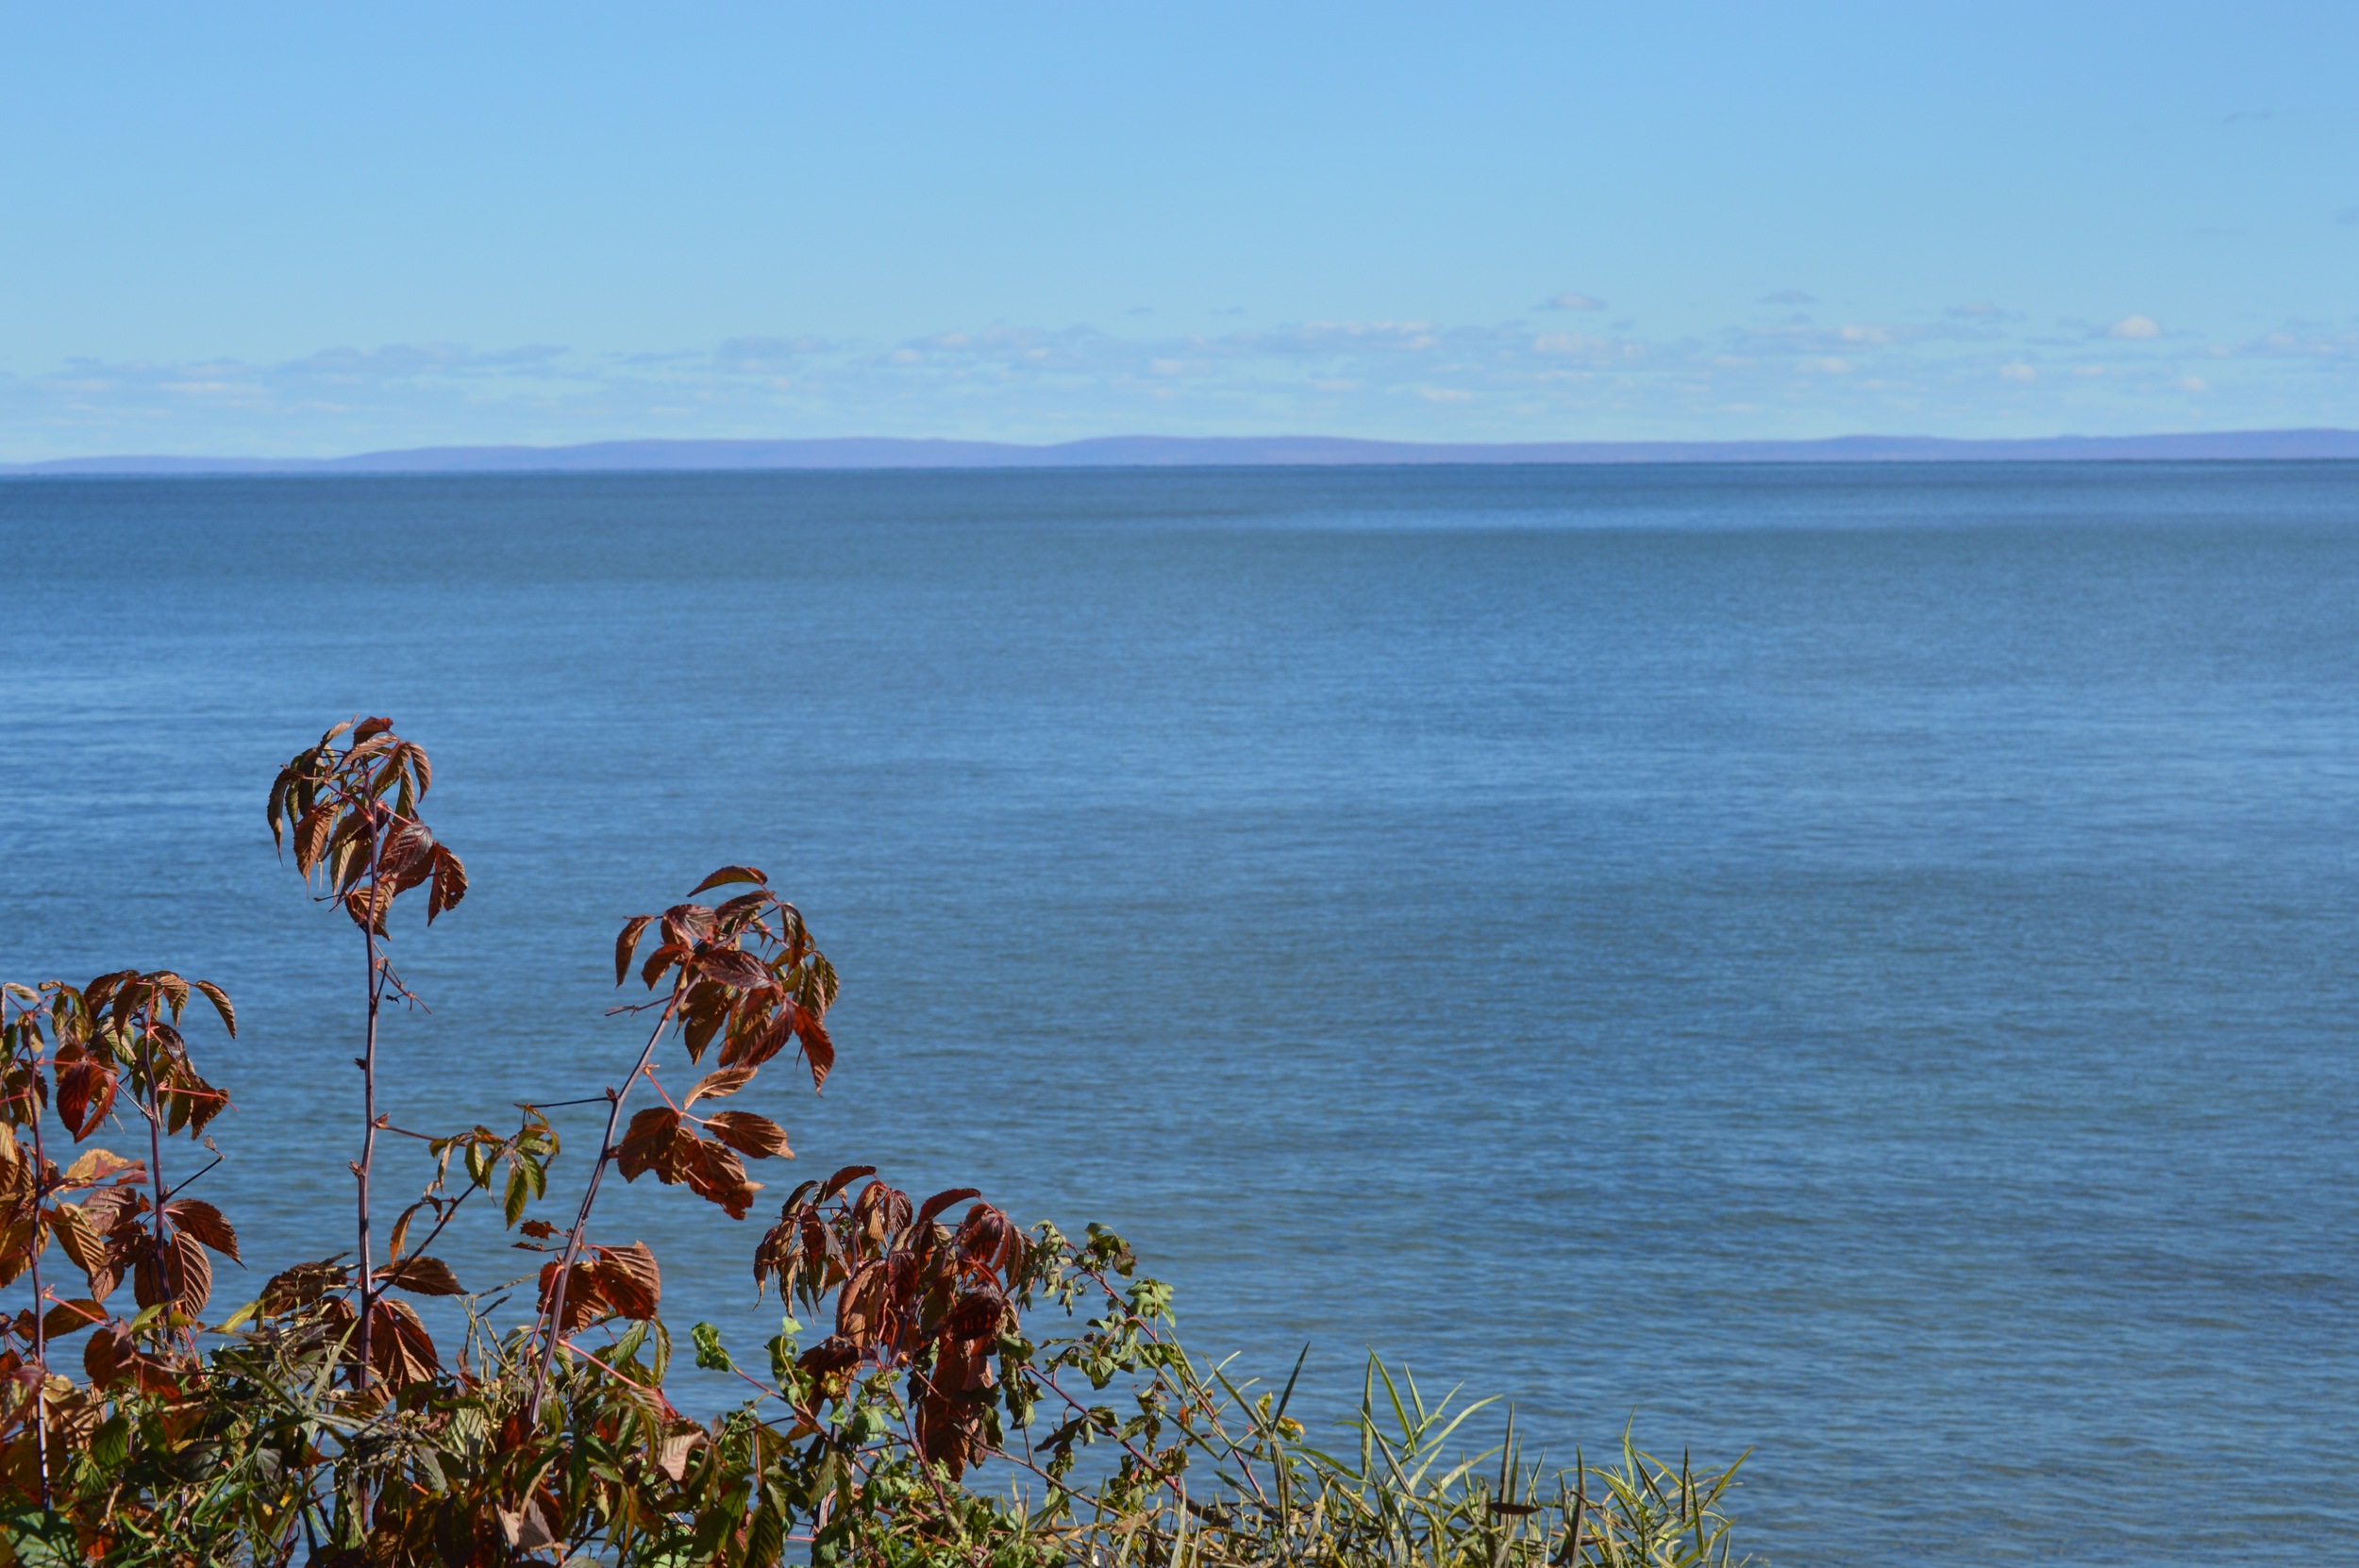 View Towards Michigan From Chebomnicon Bay